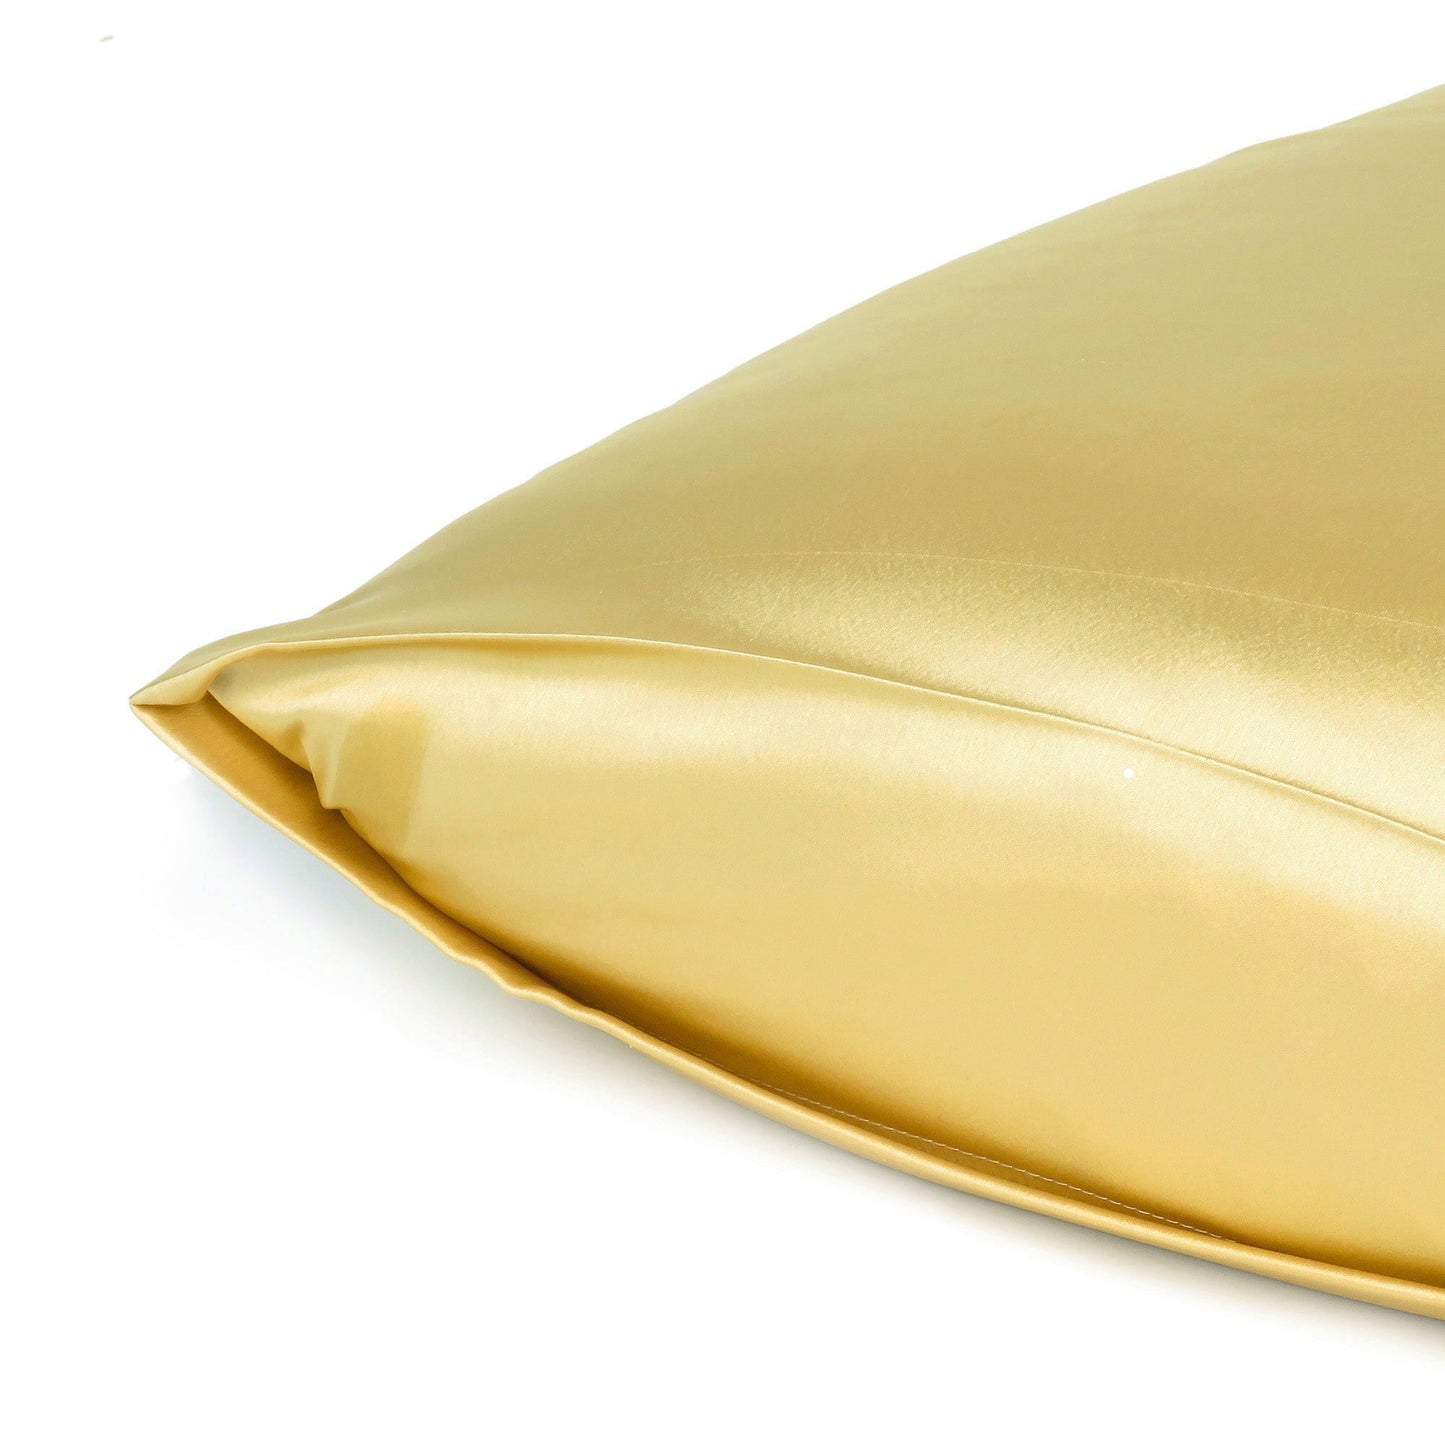 Luxury Soft Plain Satin Silk Pillowcases in Set of 2 - Parsnip Cream